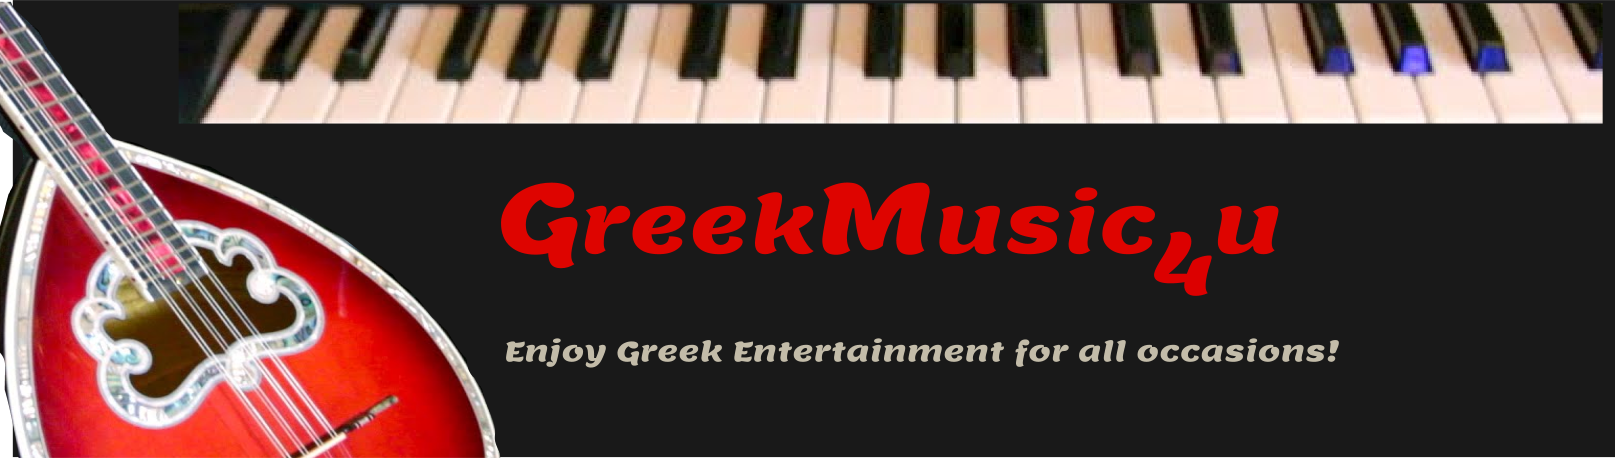 Greekmusic4u